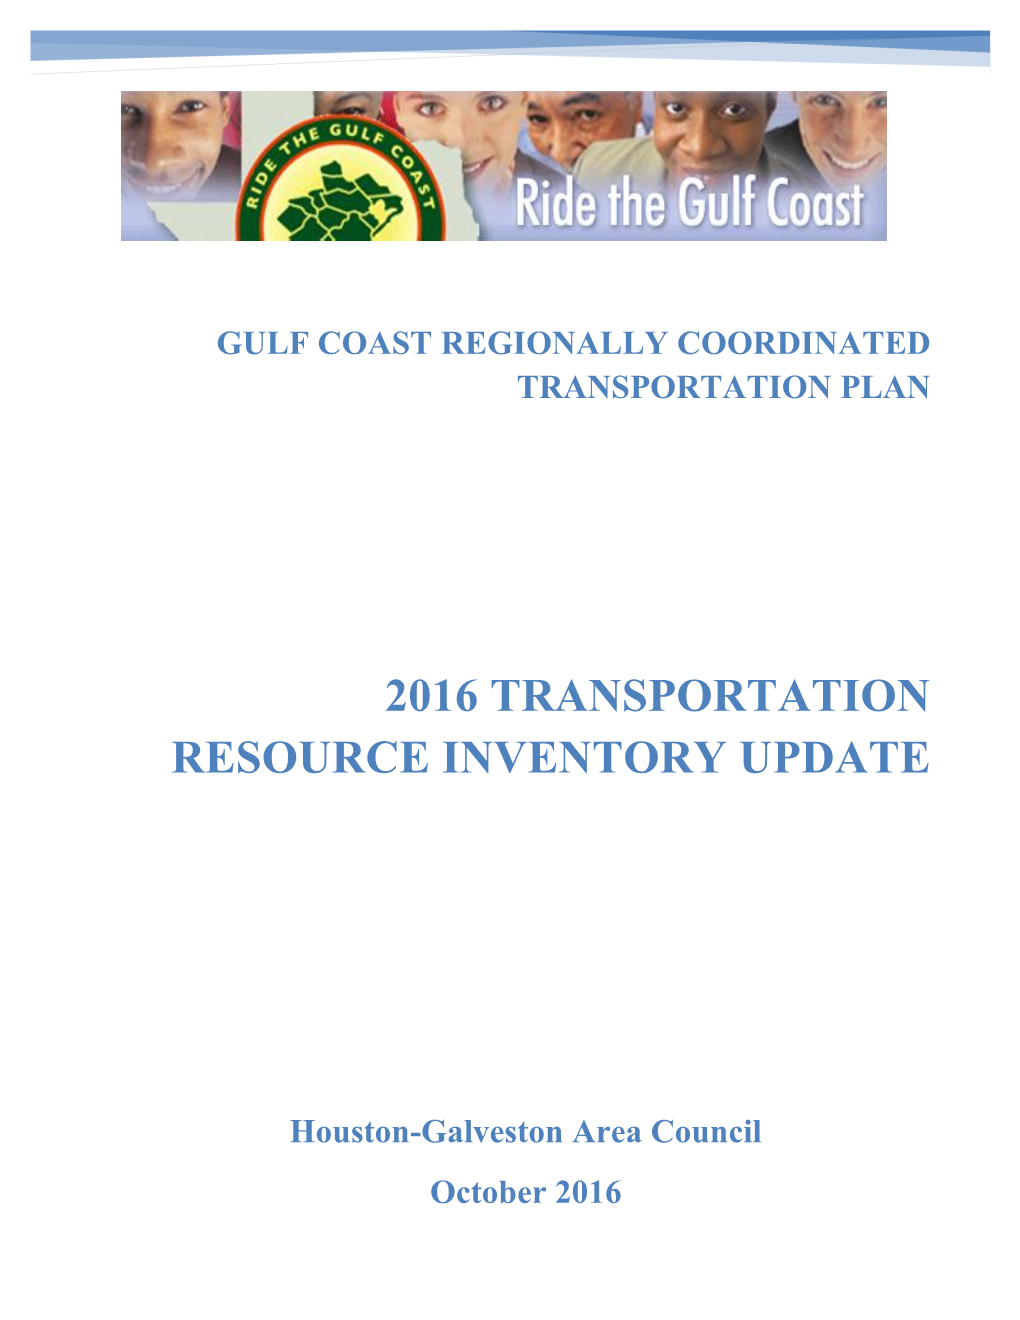 Transportation Resource Inventory Update